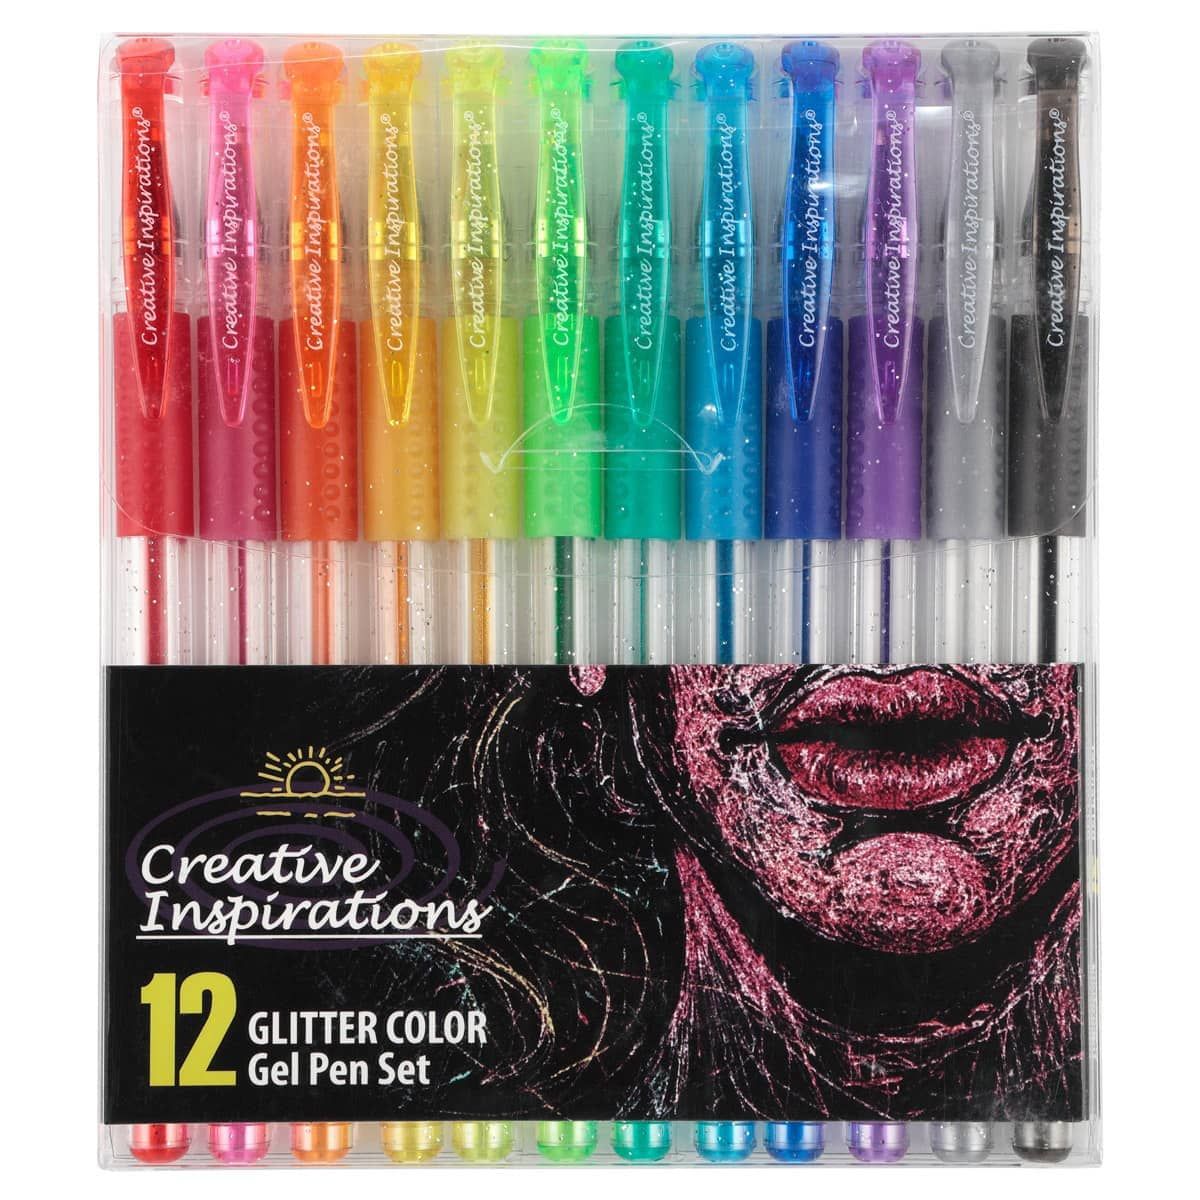 Creative Inspirations Gel Pen Color Set of 12